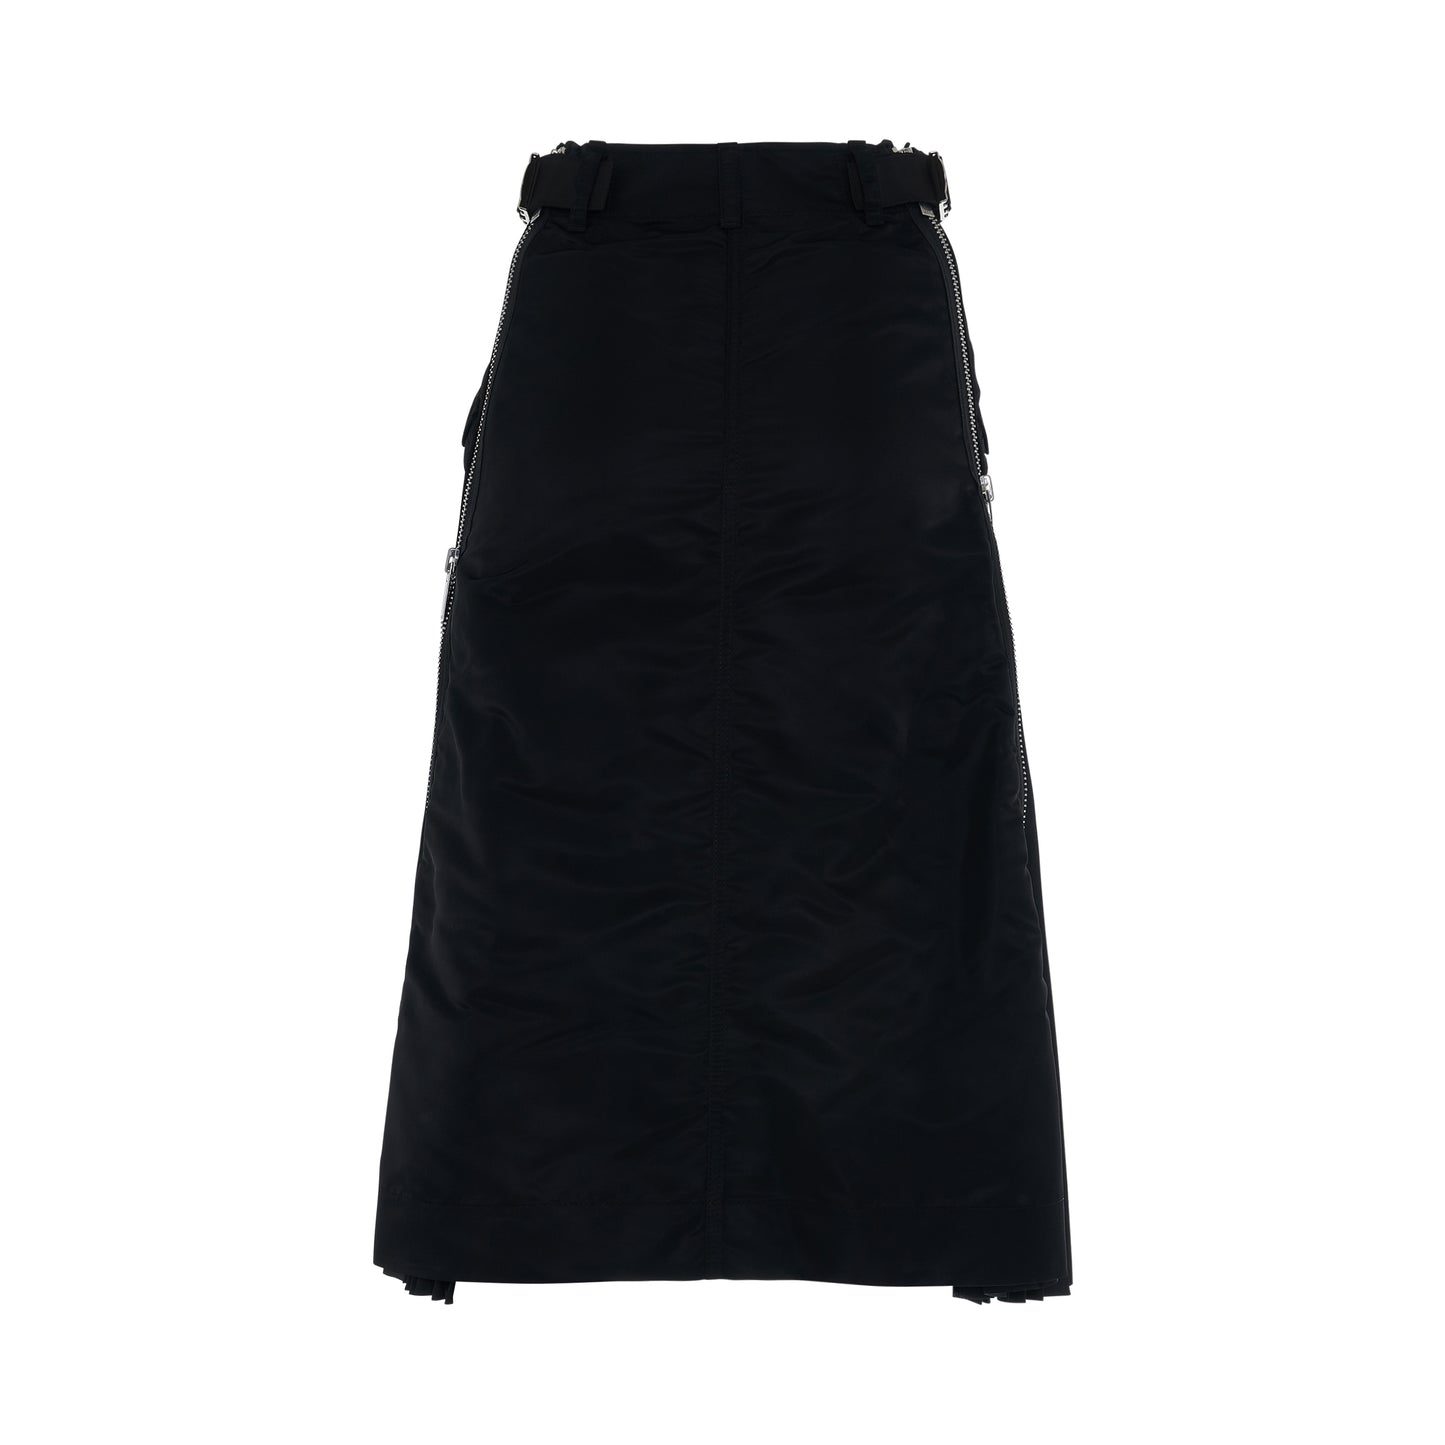 Nylon Twill Mix Skirt in Black